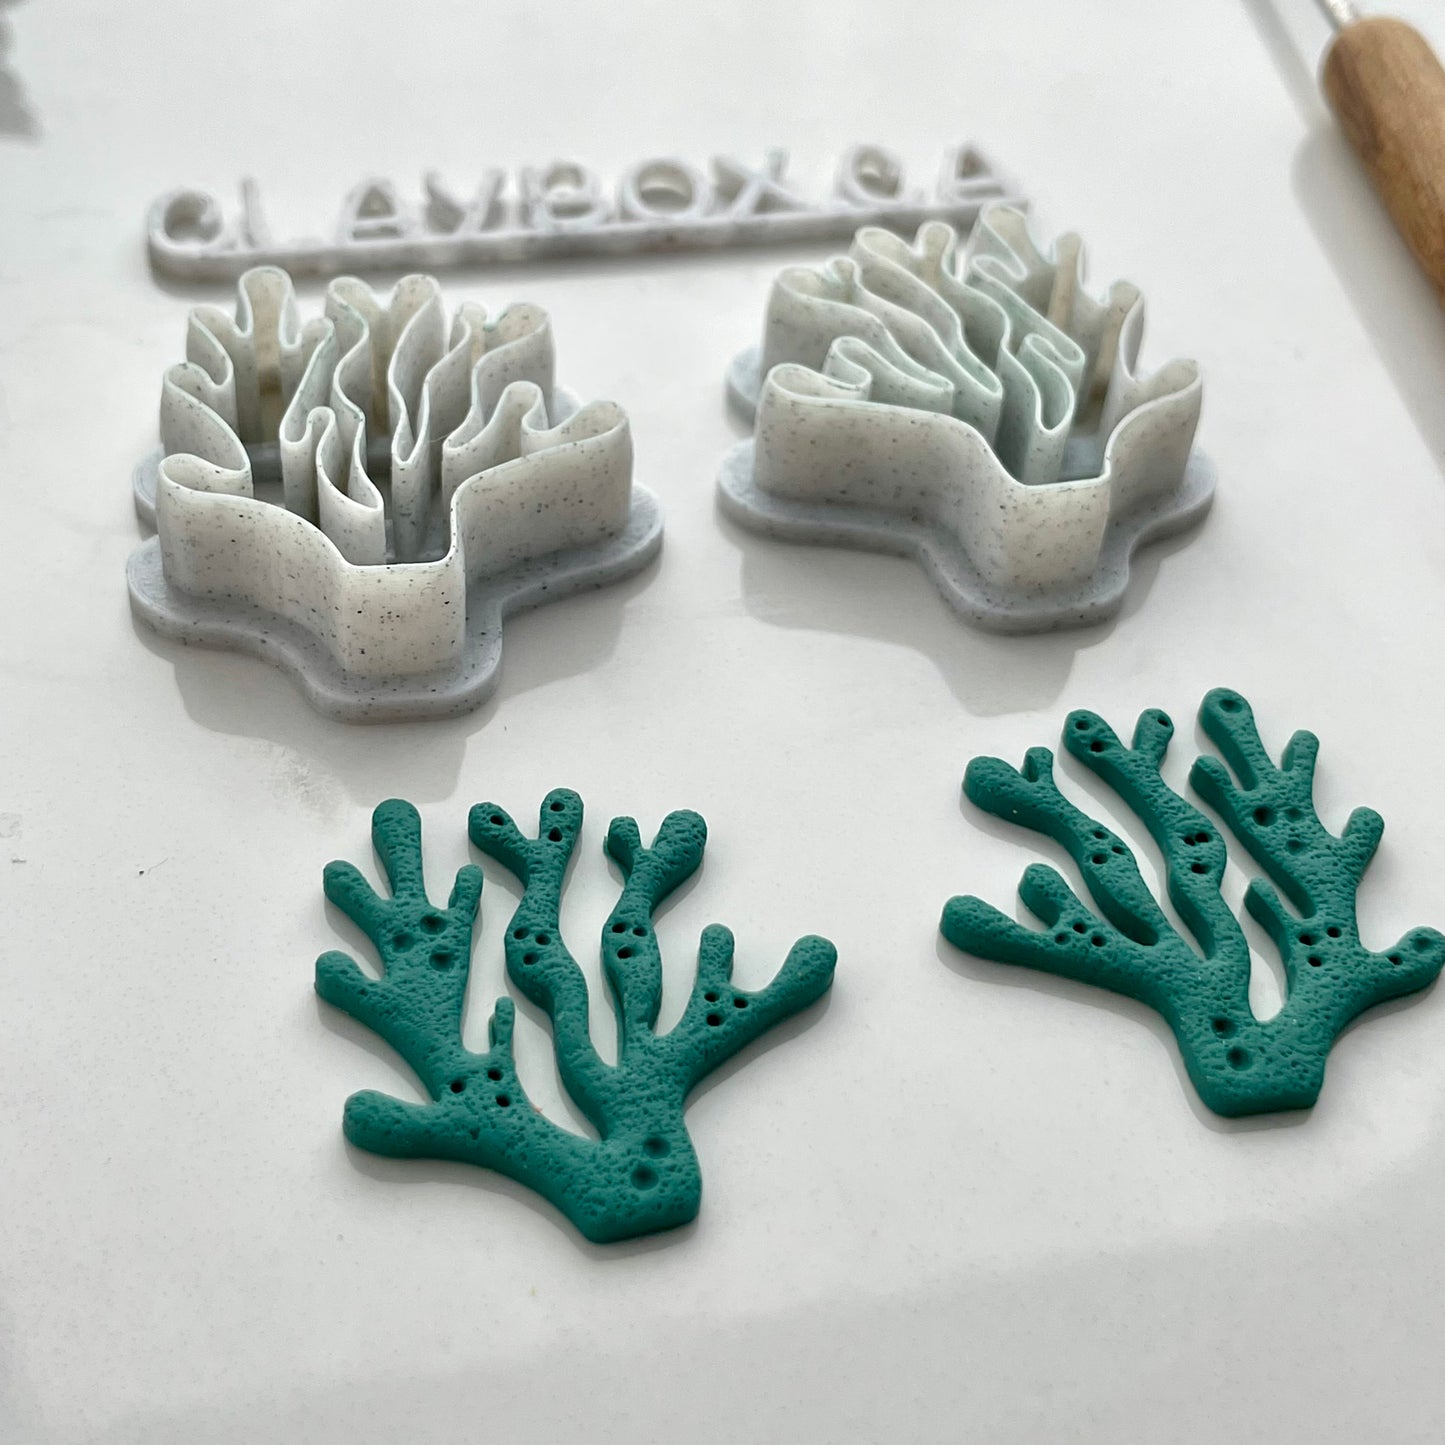 Coral cutter pair / Seaweed cutter pair